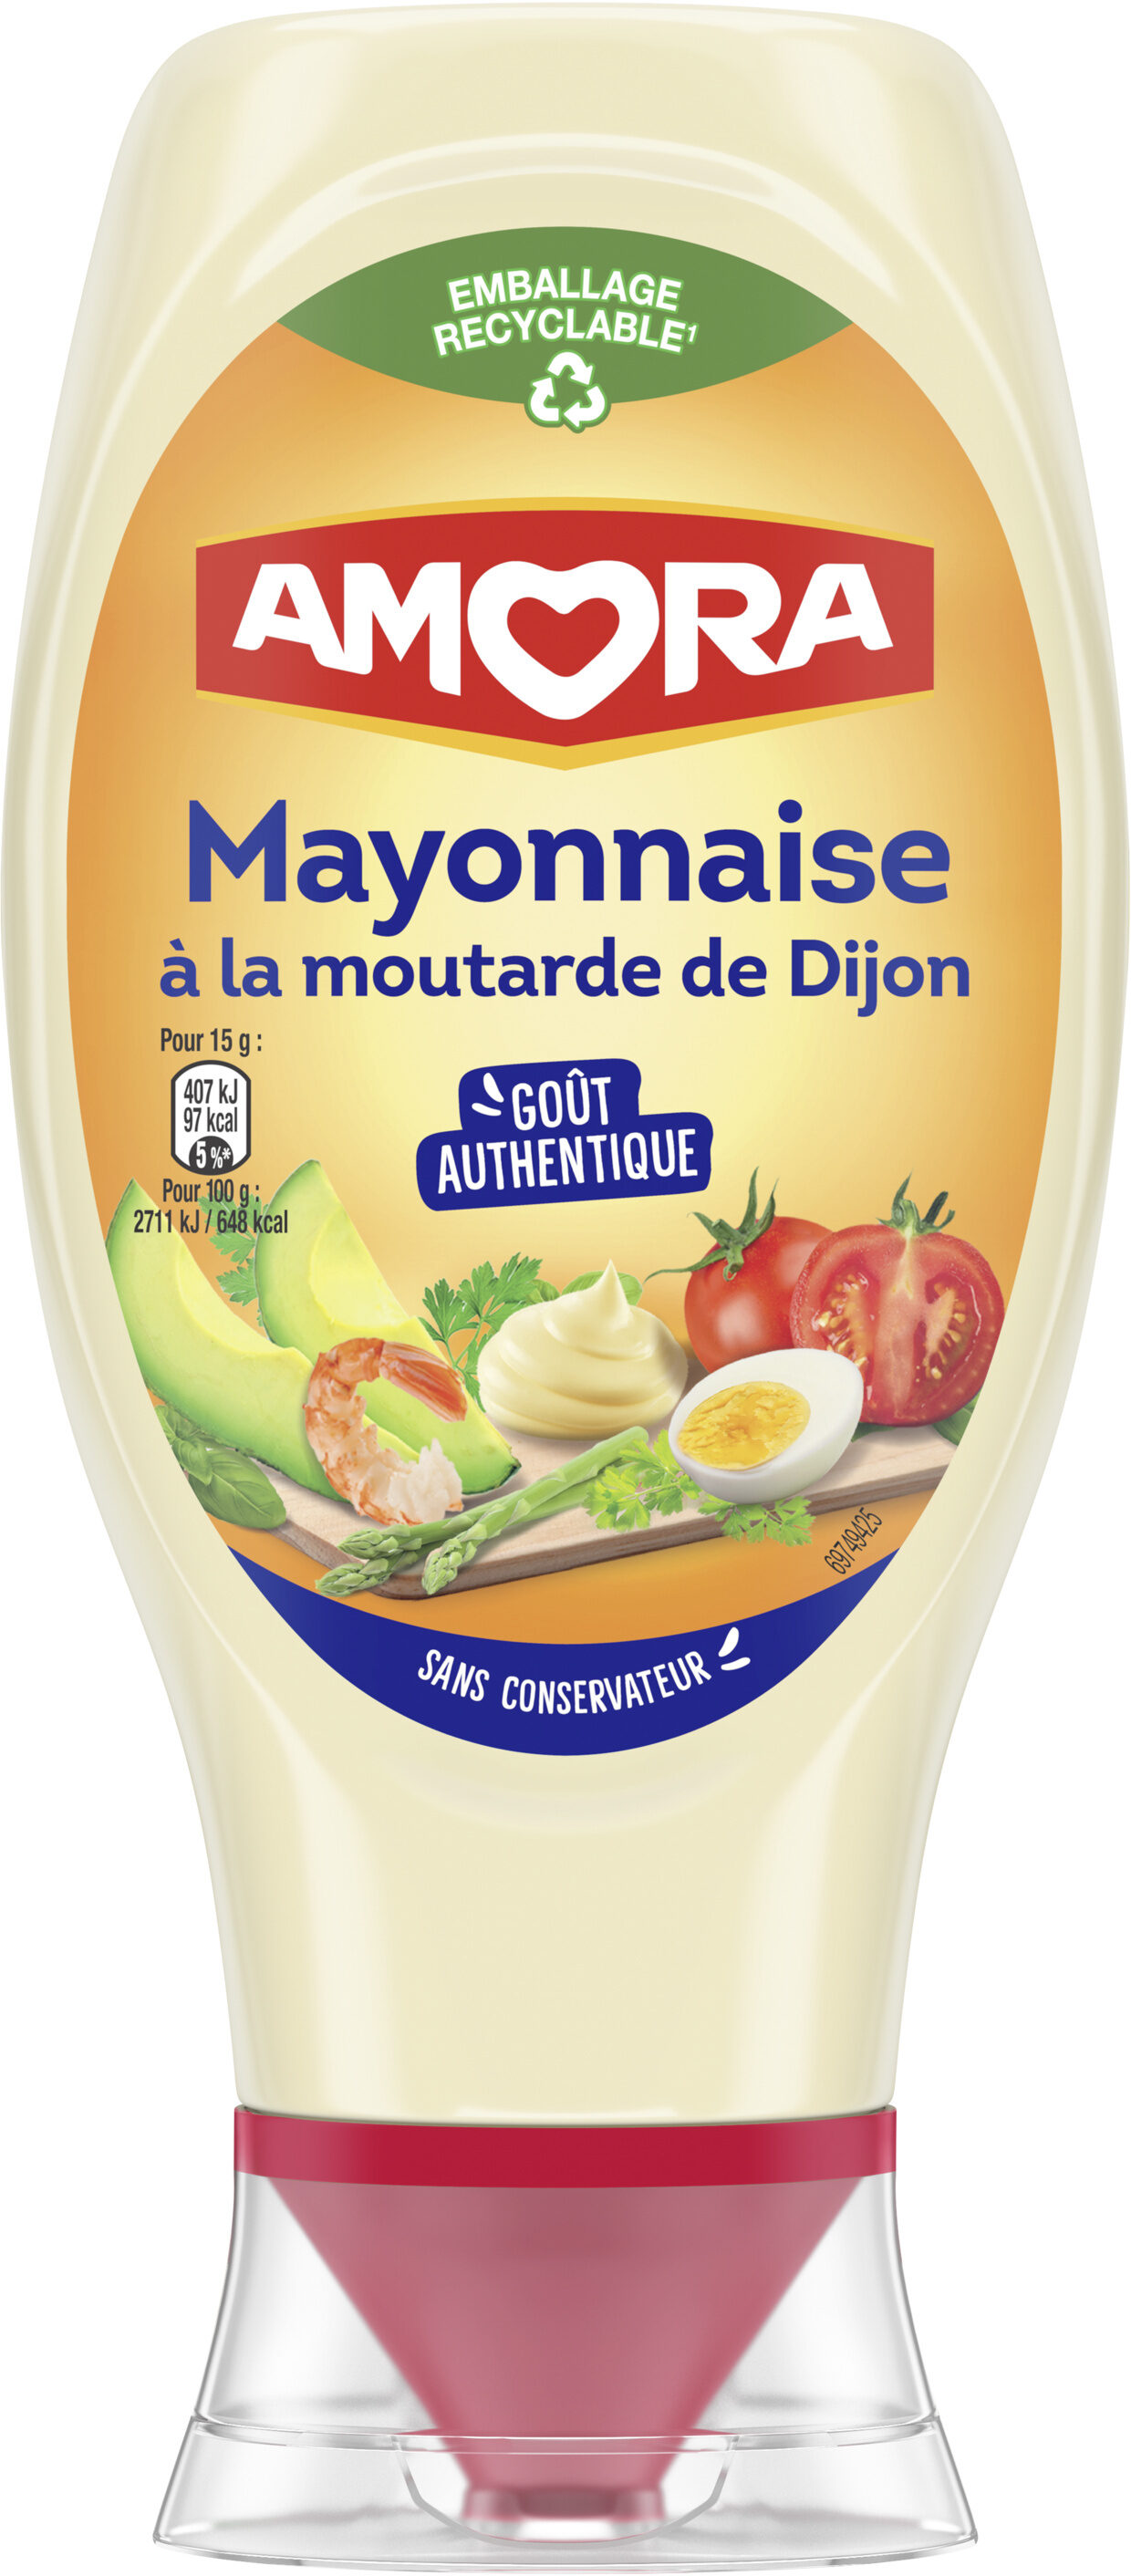 Amora Mayonnaise De Dijon Flacon Souple 415g - Produit